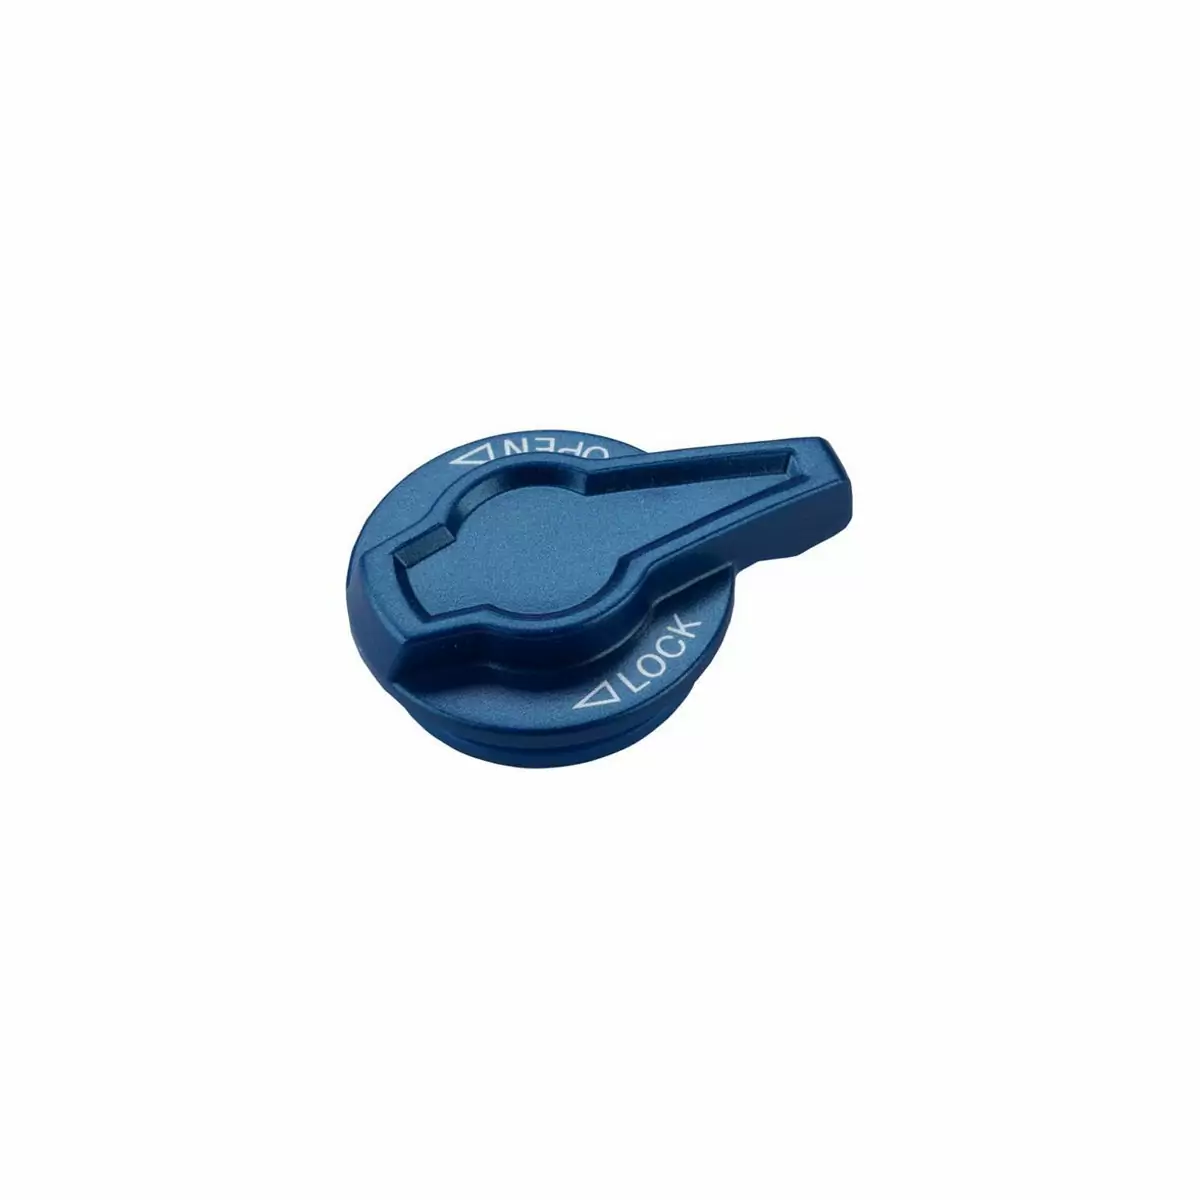 capuchon pivotant bleu pour la cartouche de SF15-XCR-LO/SF16-Raidon XC-LO - image